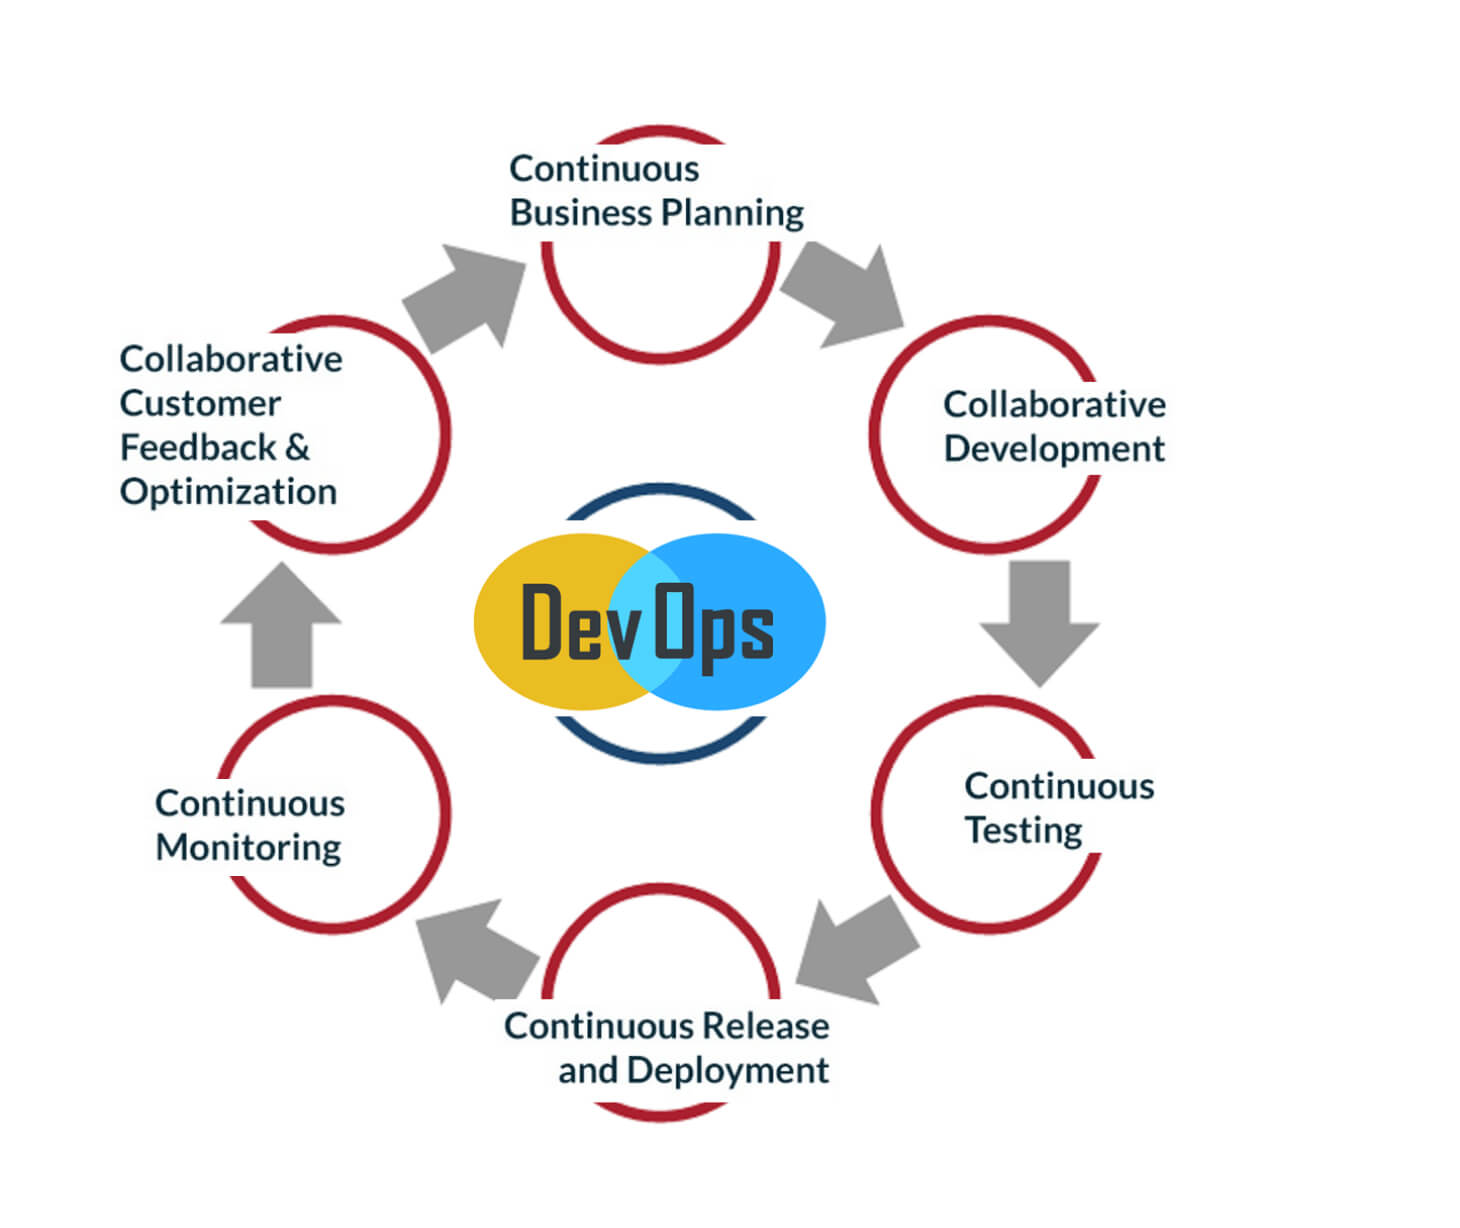 A scheme illustrating the key aspects of DevOps as a service